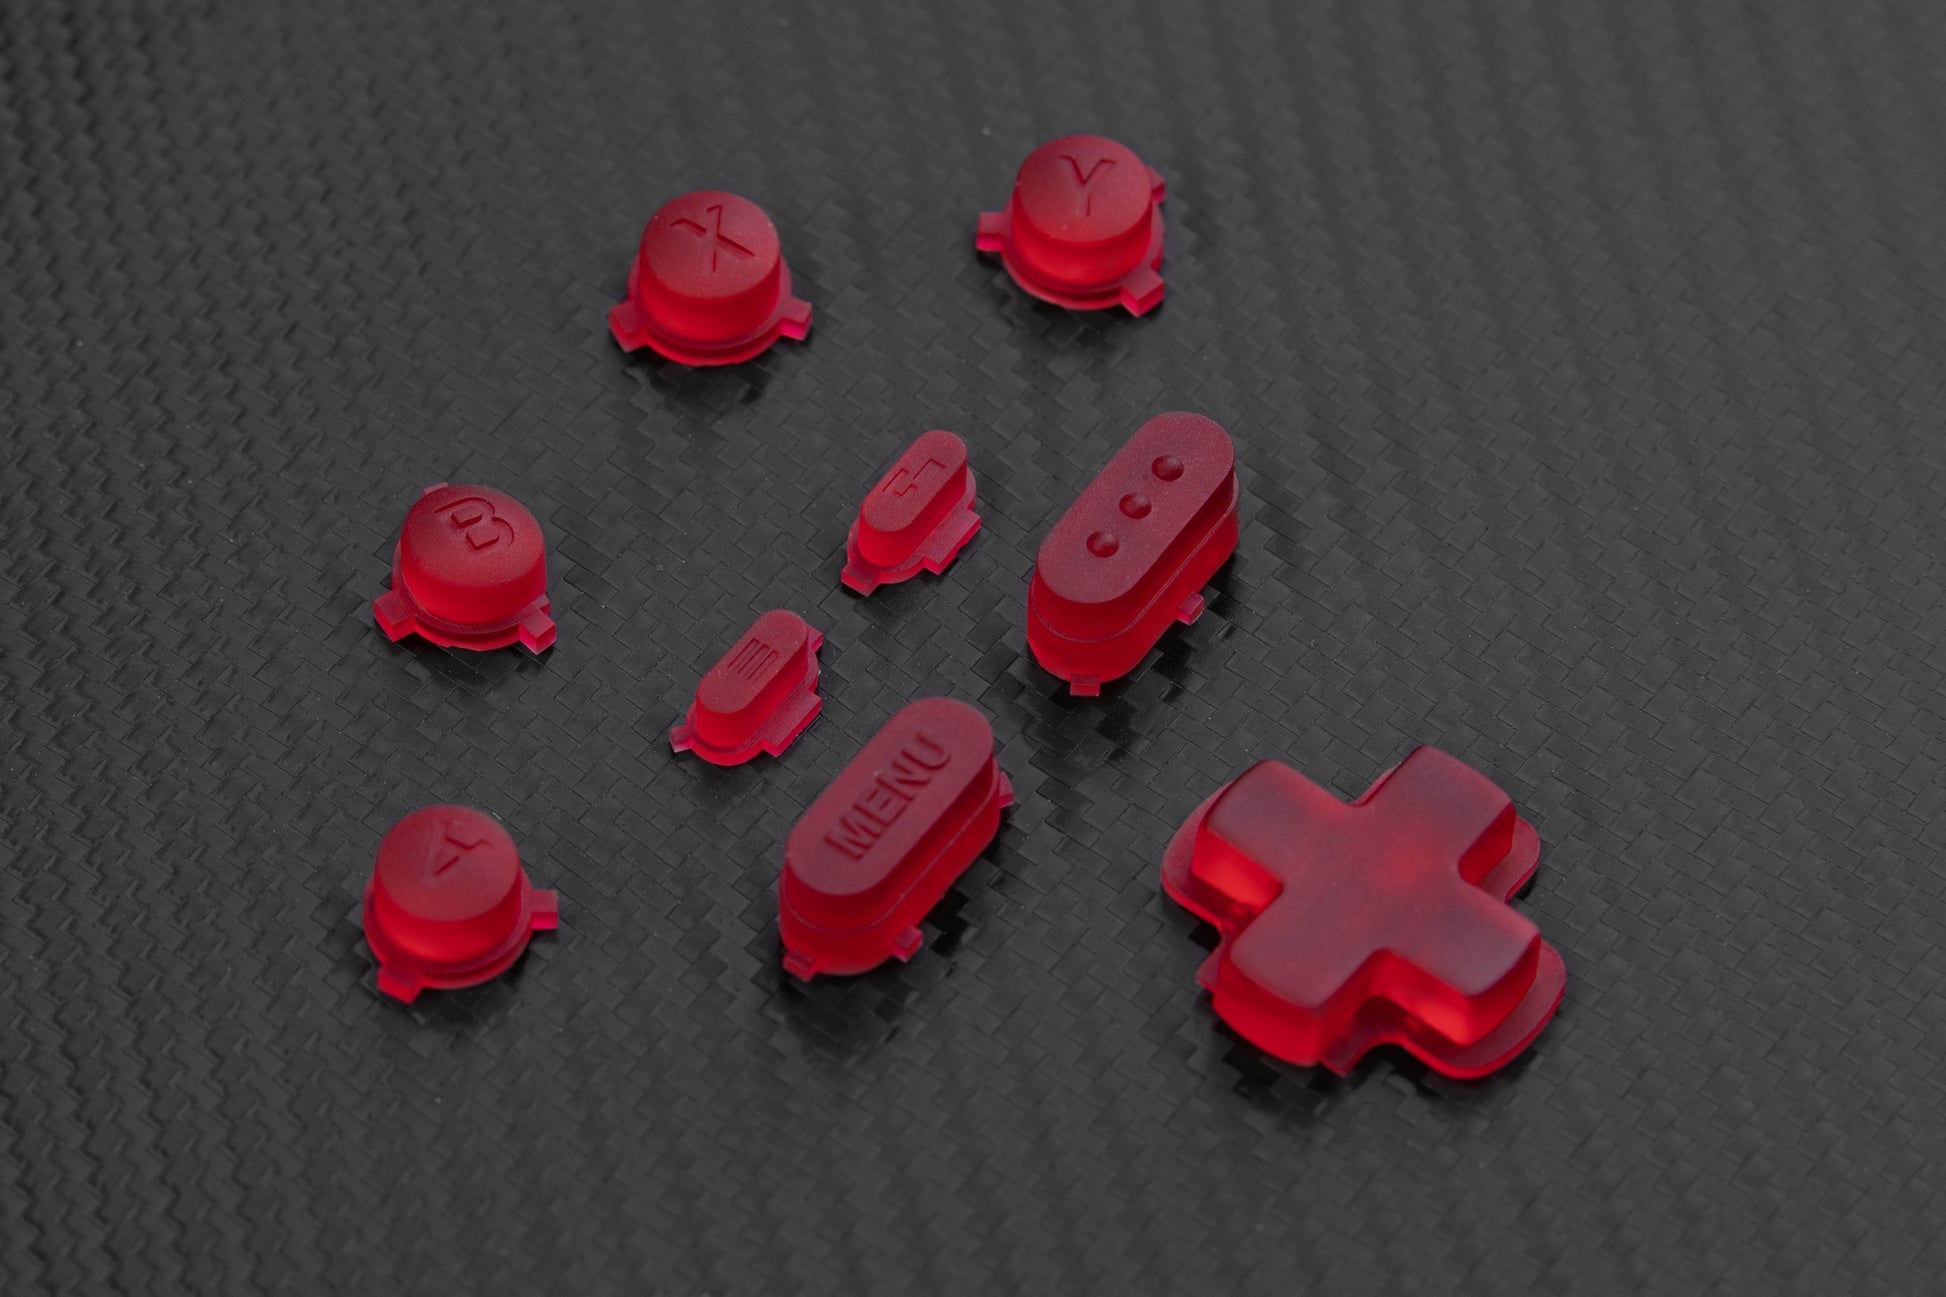 Crimson red steam deck buttons on a carbon fiber background